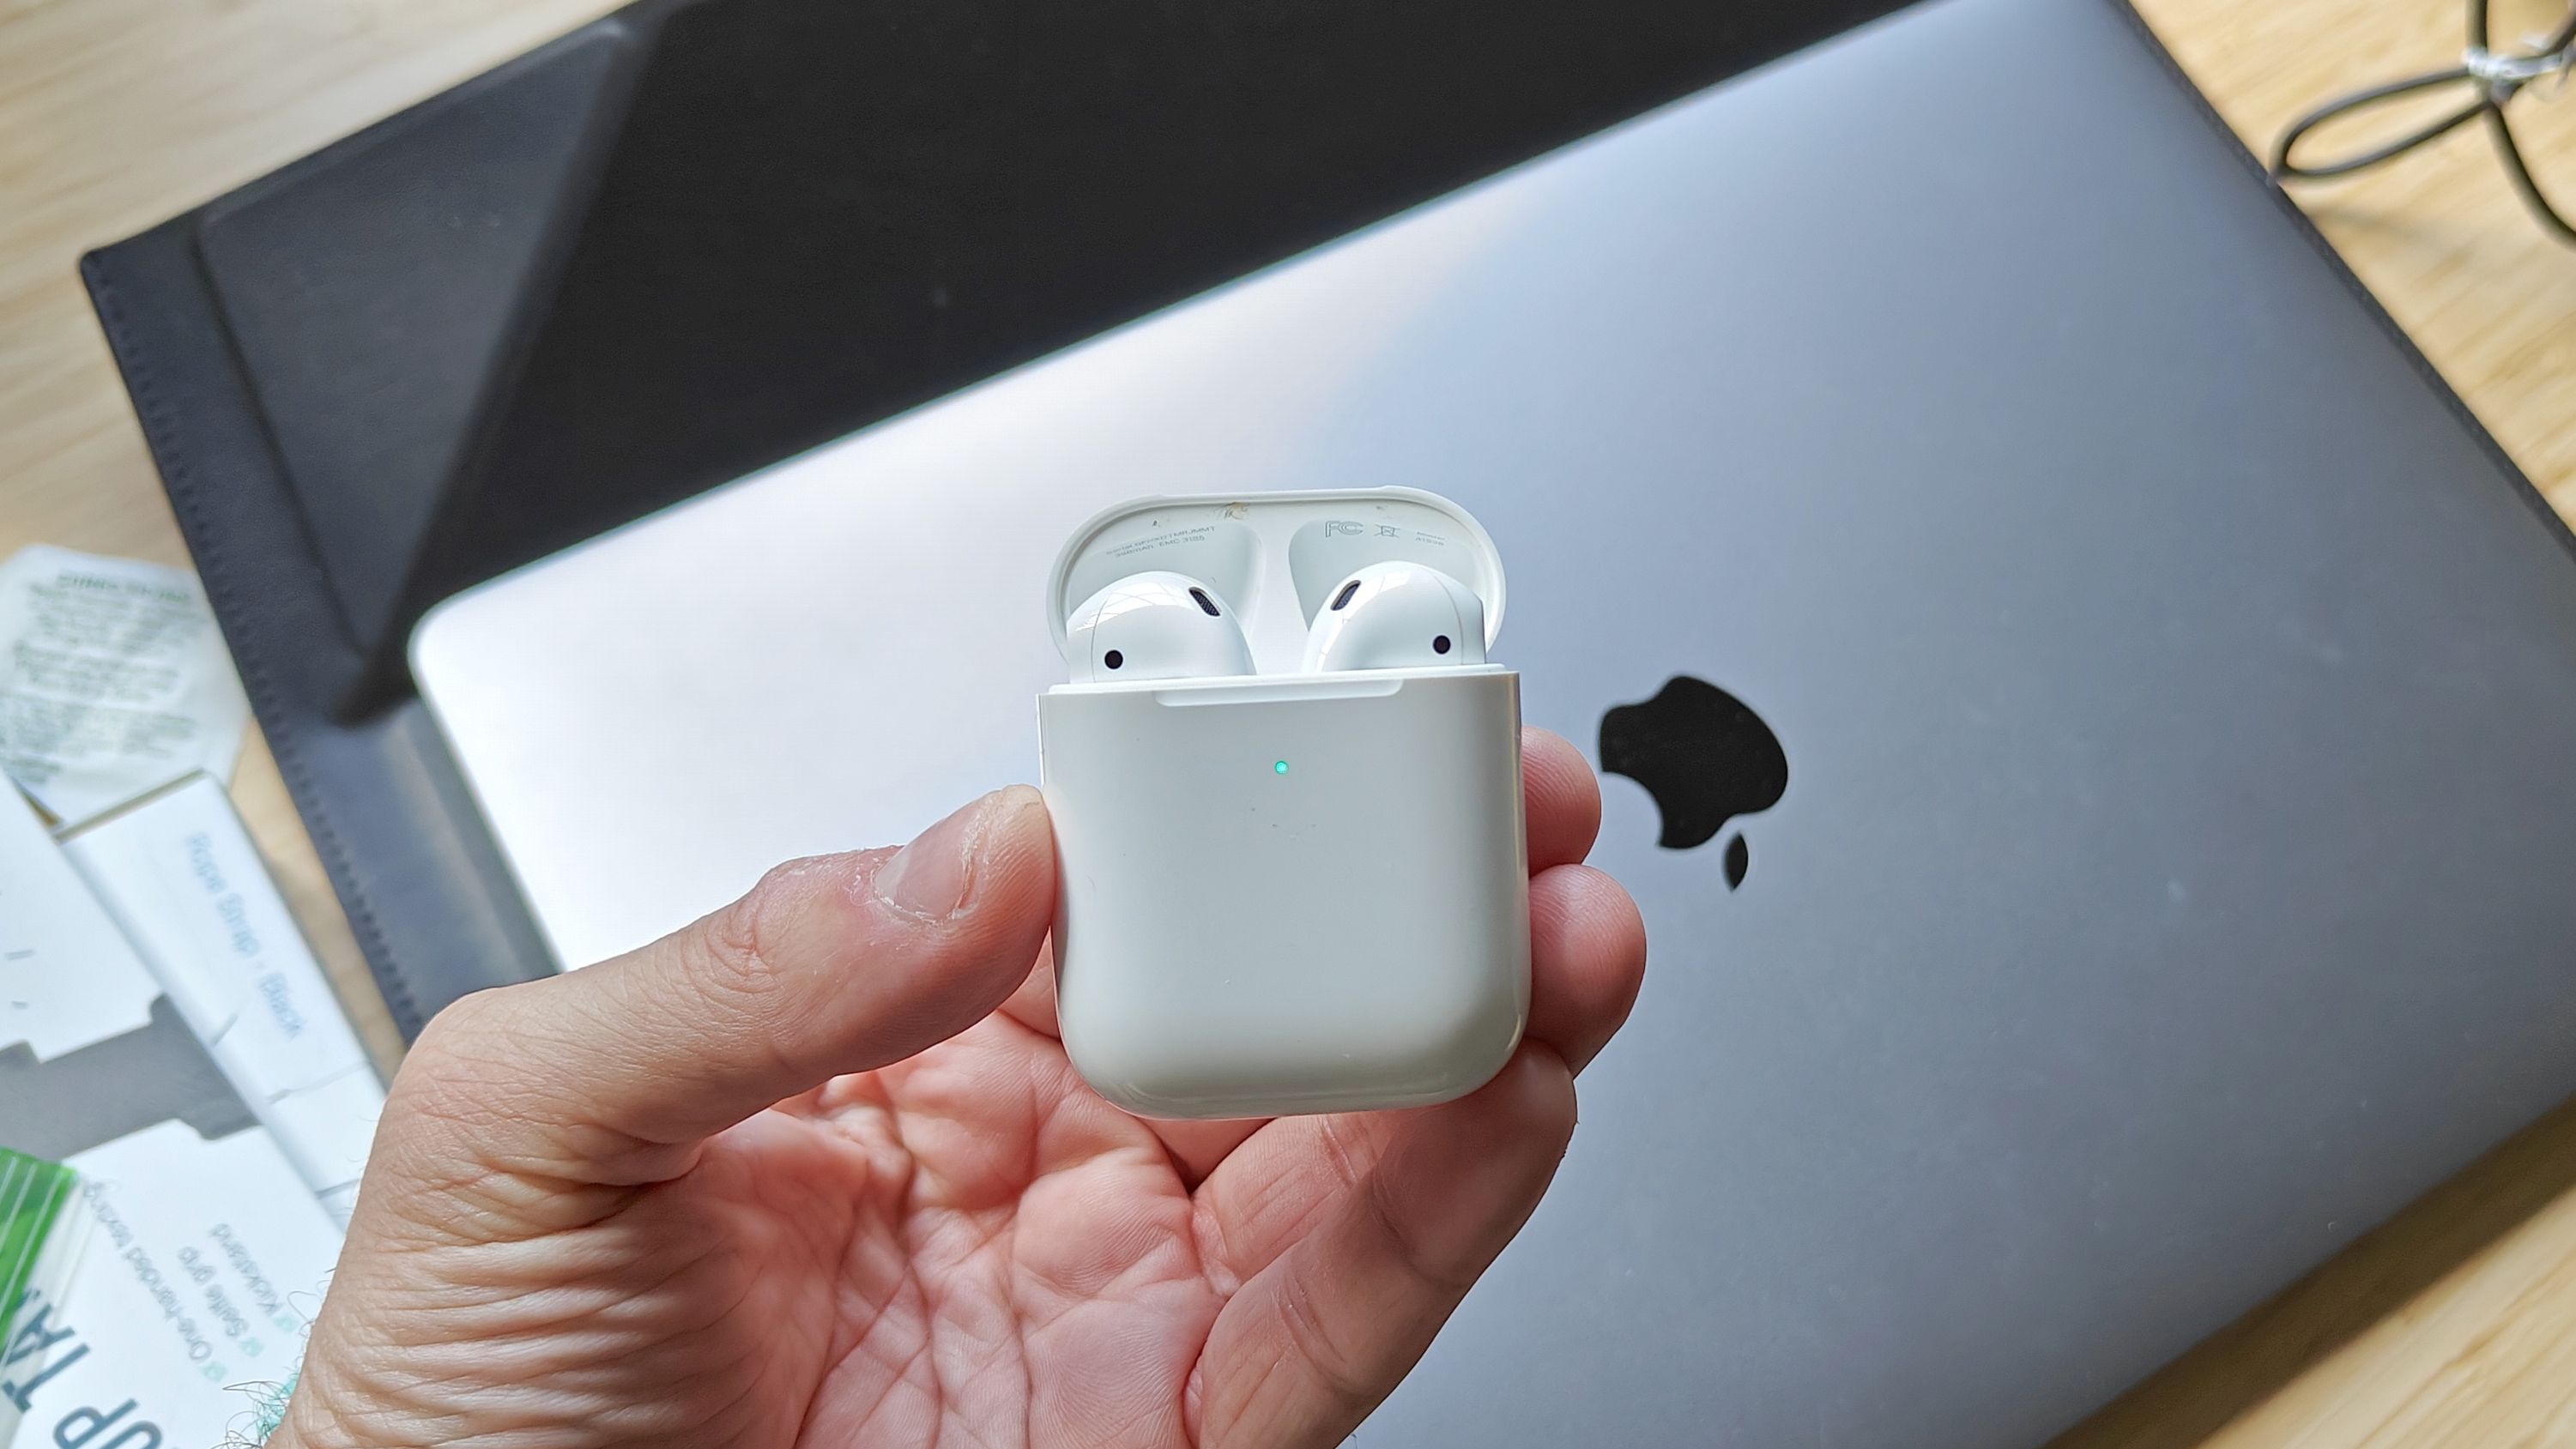 Apple Airpods 2 Wireless Charging Original